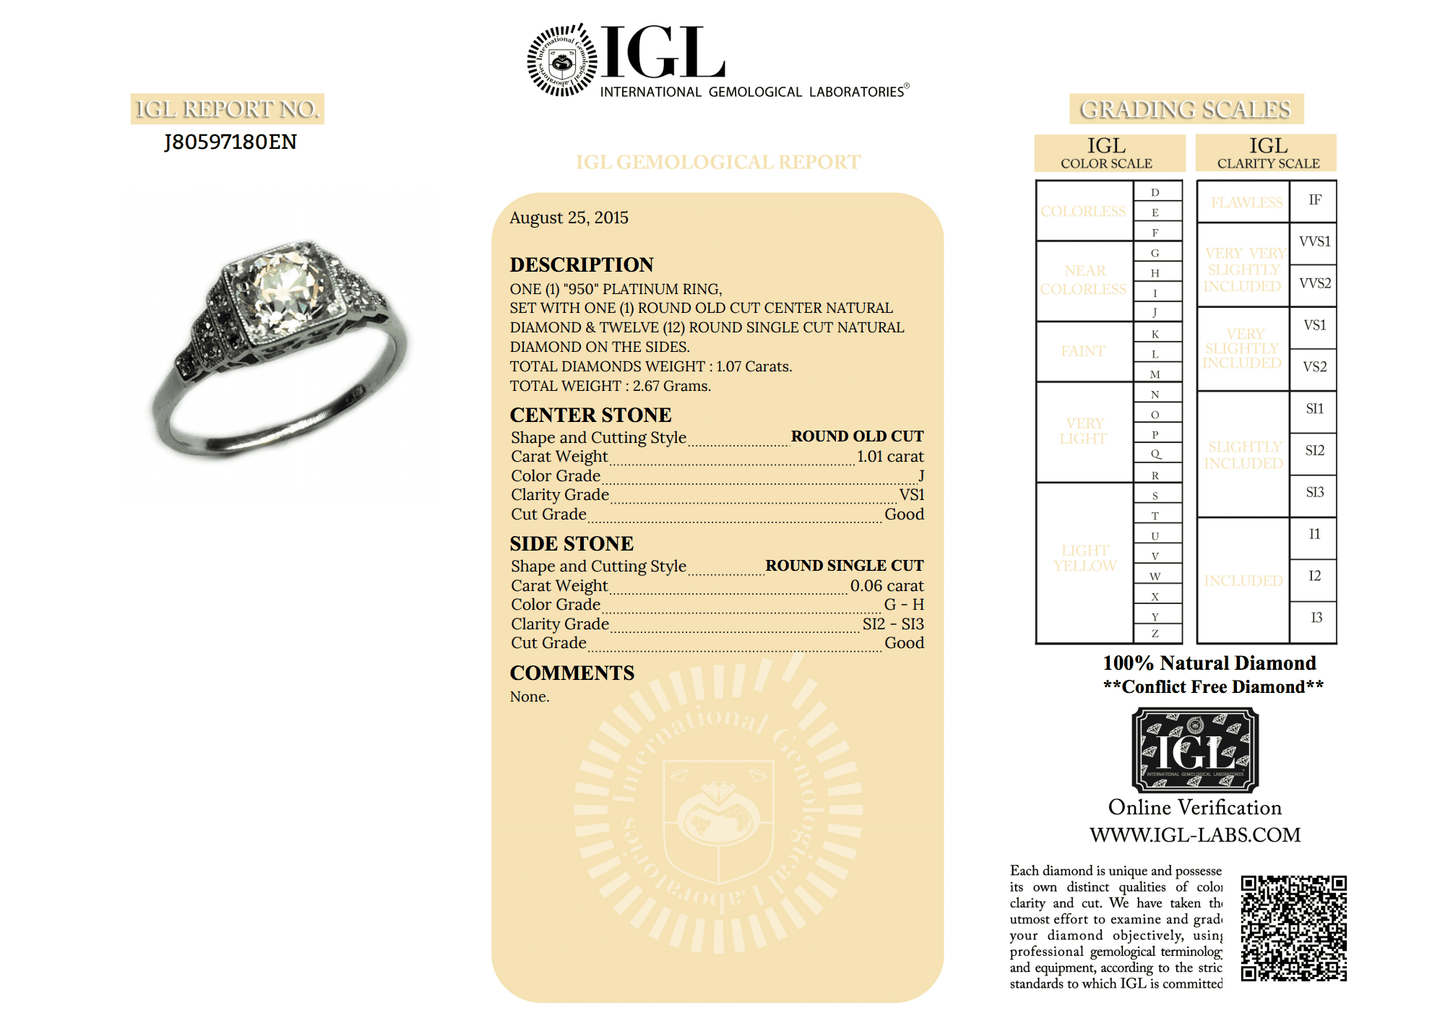 Art Deco 1.01 Carat Old Cut Diamond Ring